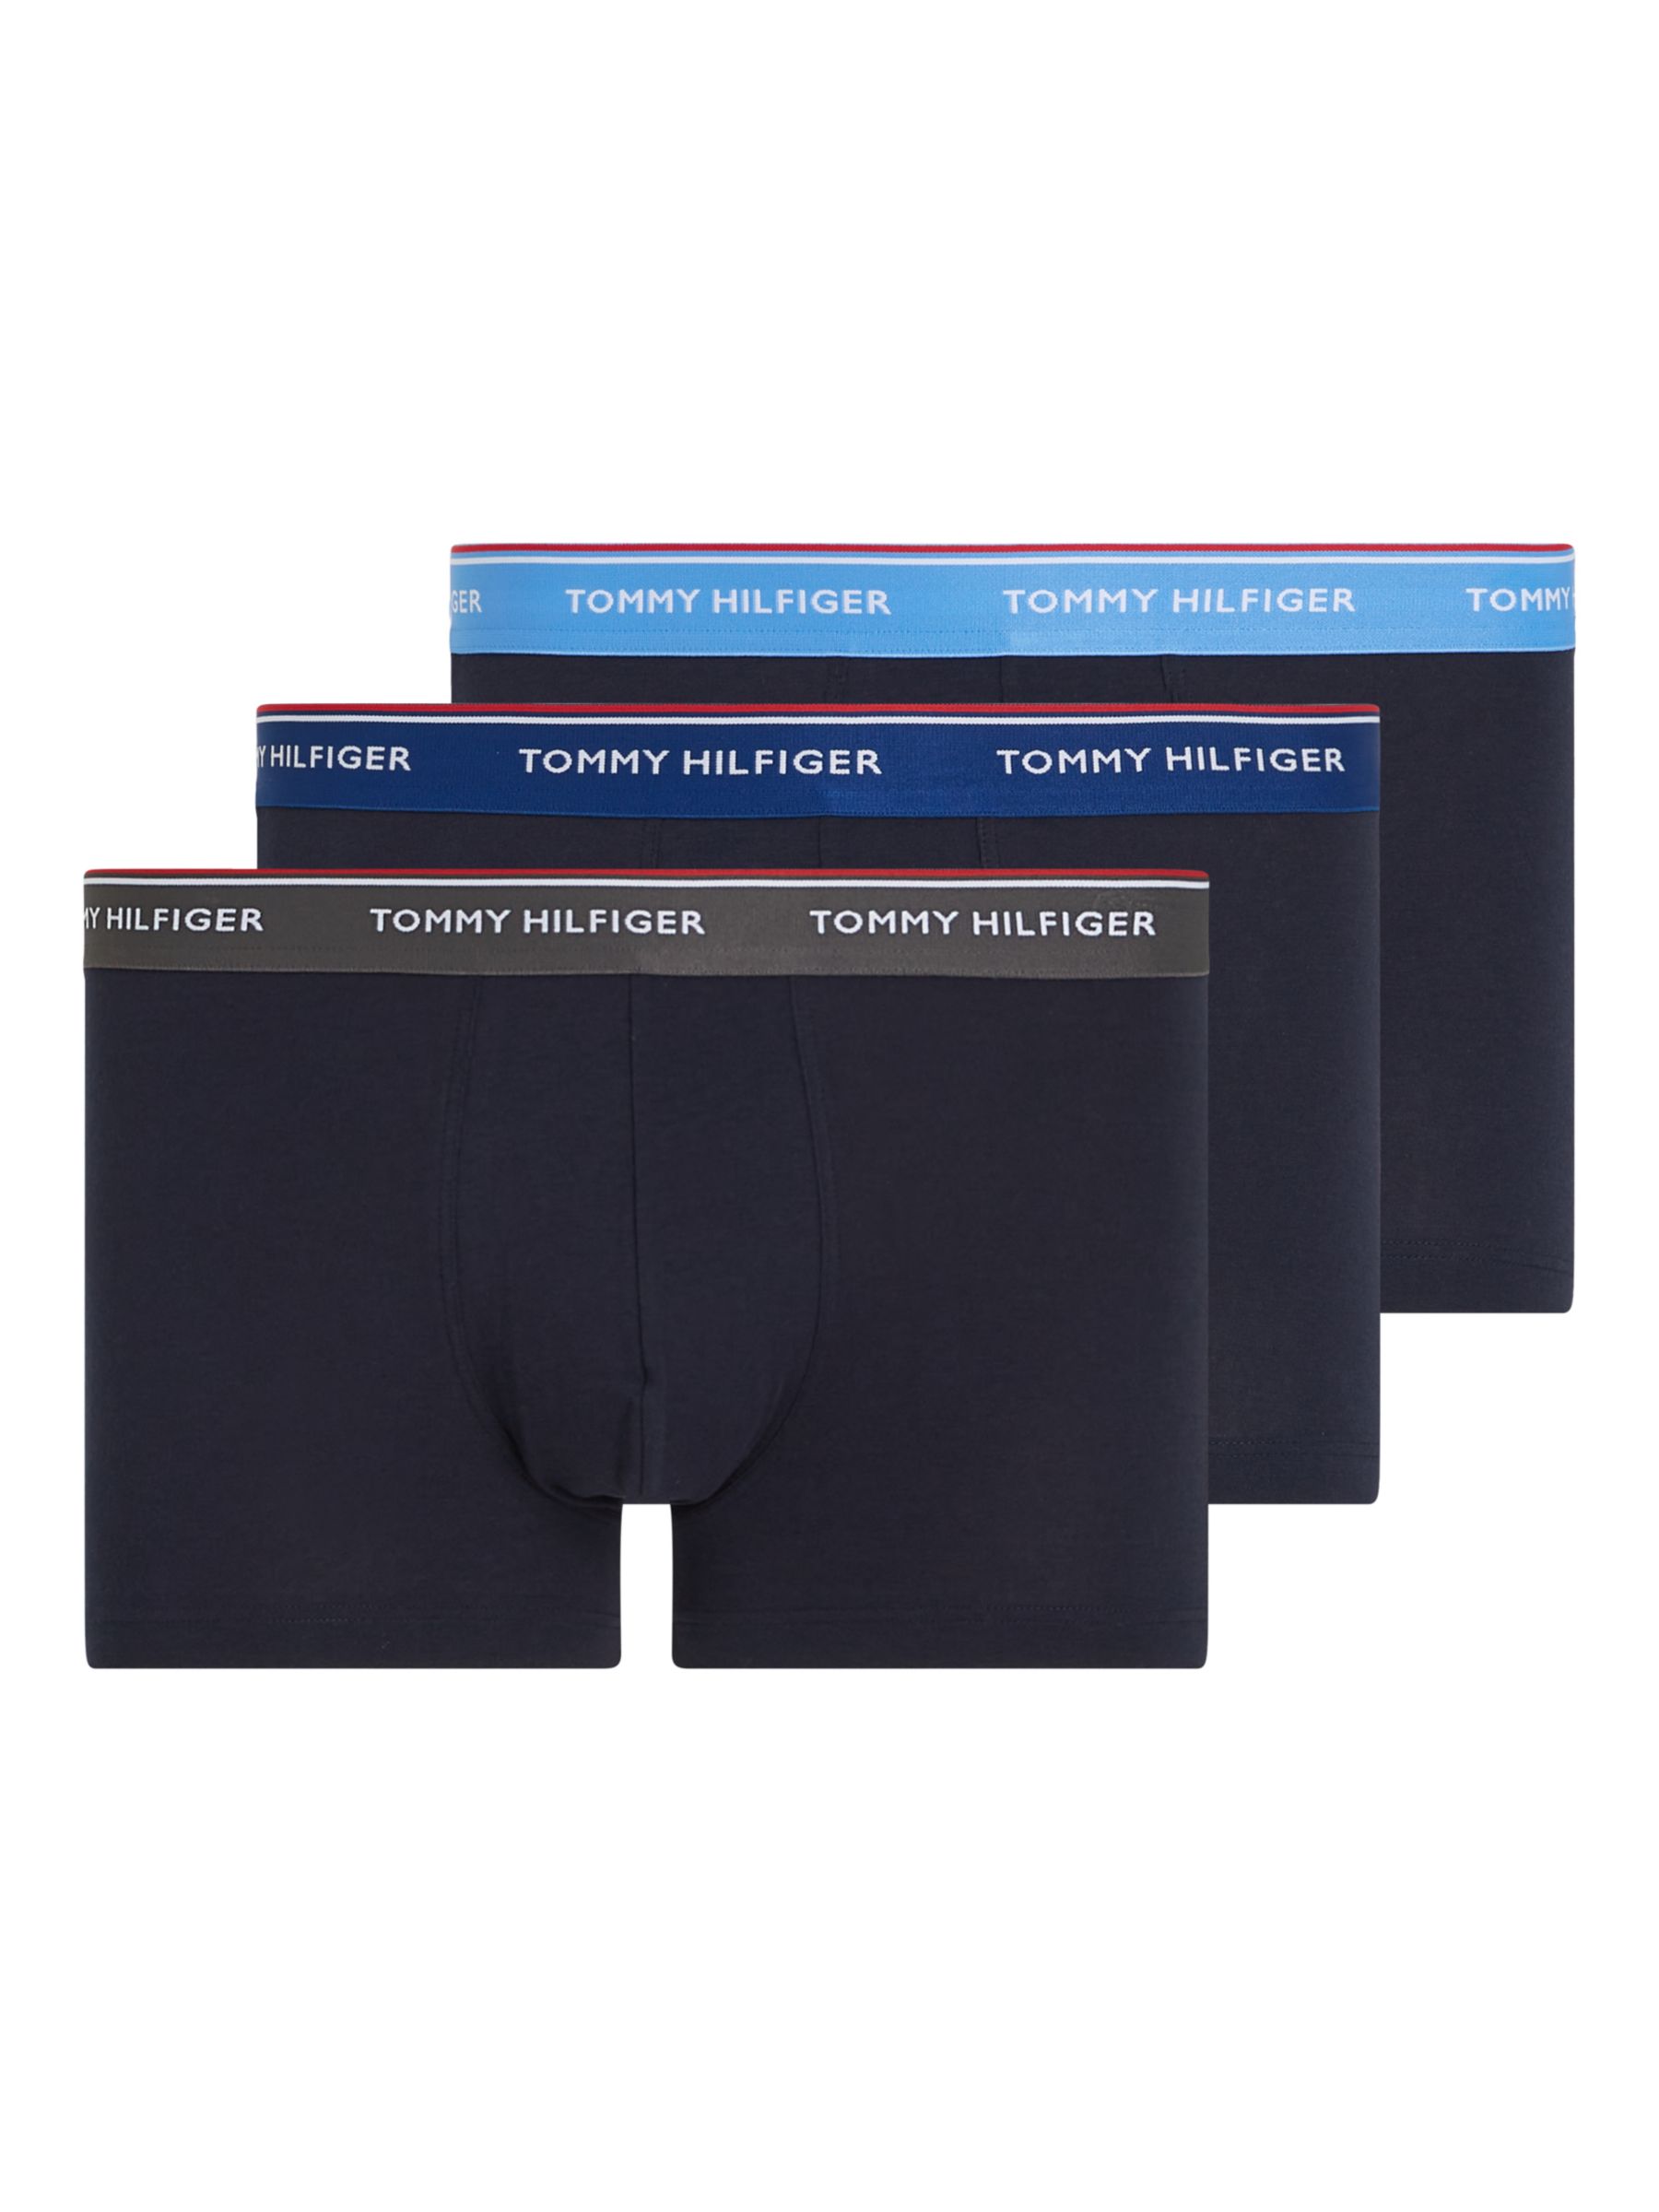 Tommy Hilfiger Organic Cotton Blend Trunks, Pack of 3, Bluespel/Ancblue/Ash, L